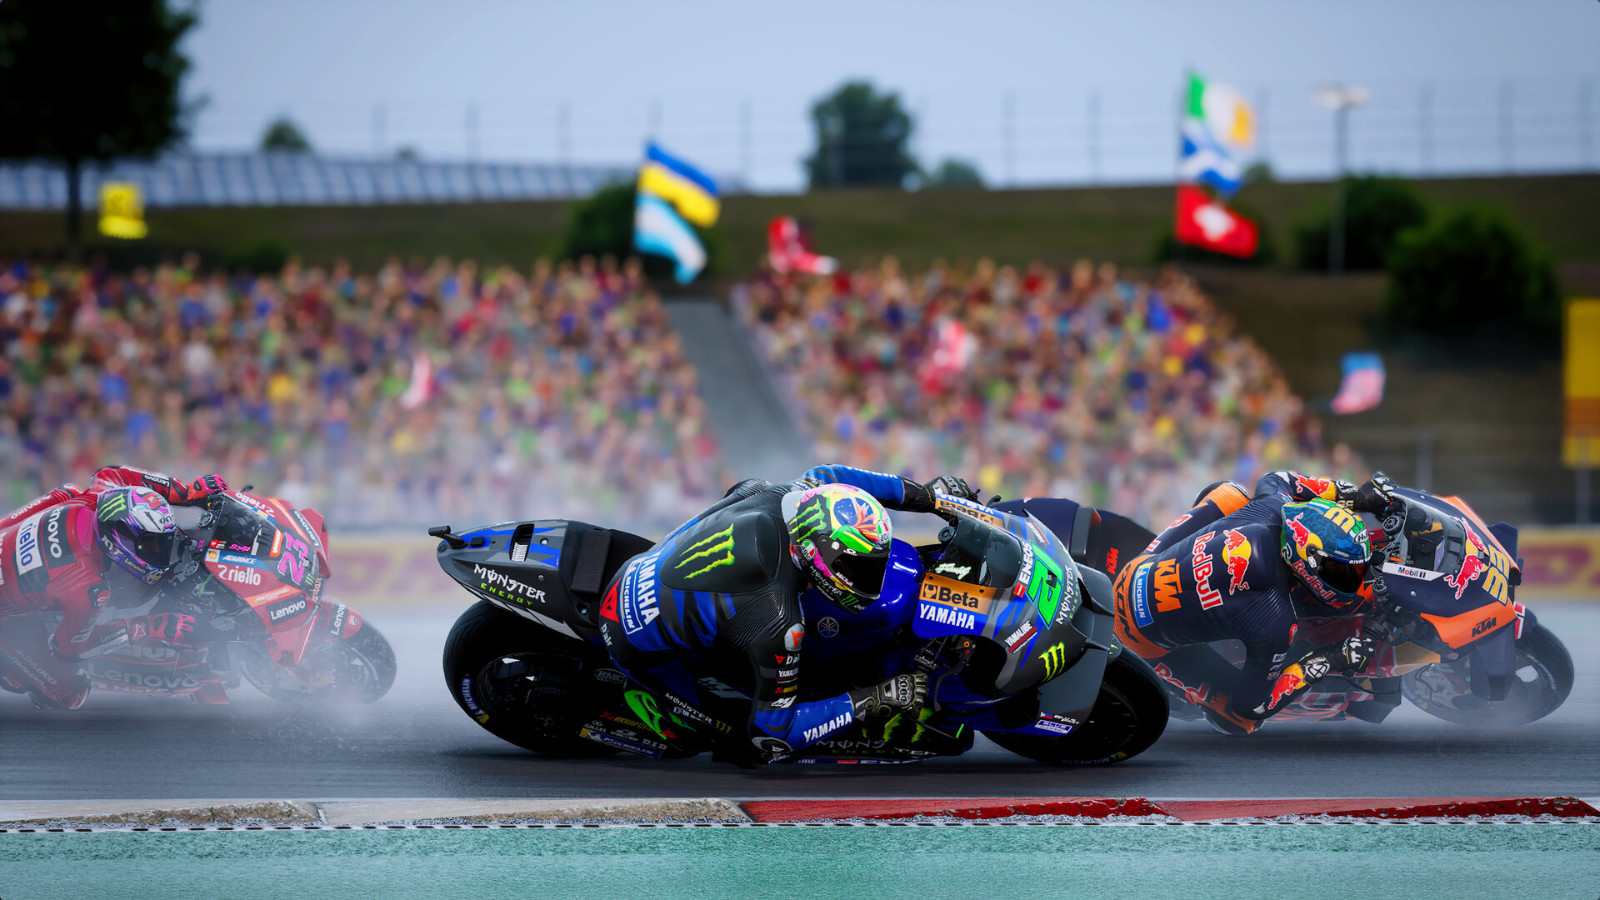 《MotoGP 23》Steam页面上线 6月8日发售 二次世界 第11张